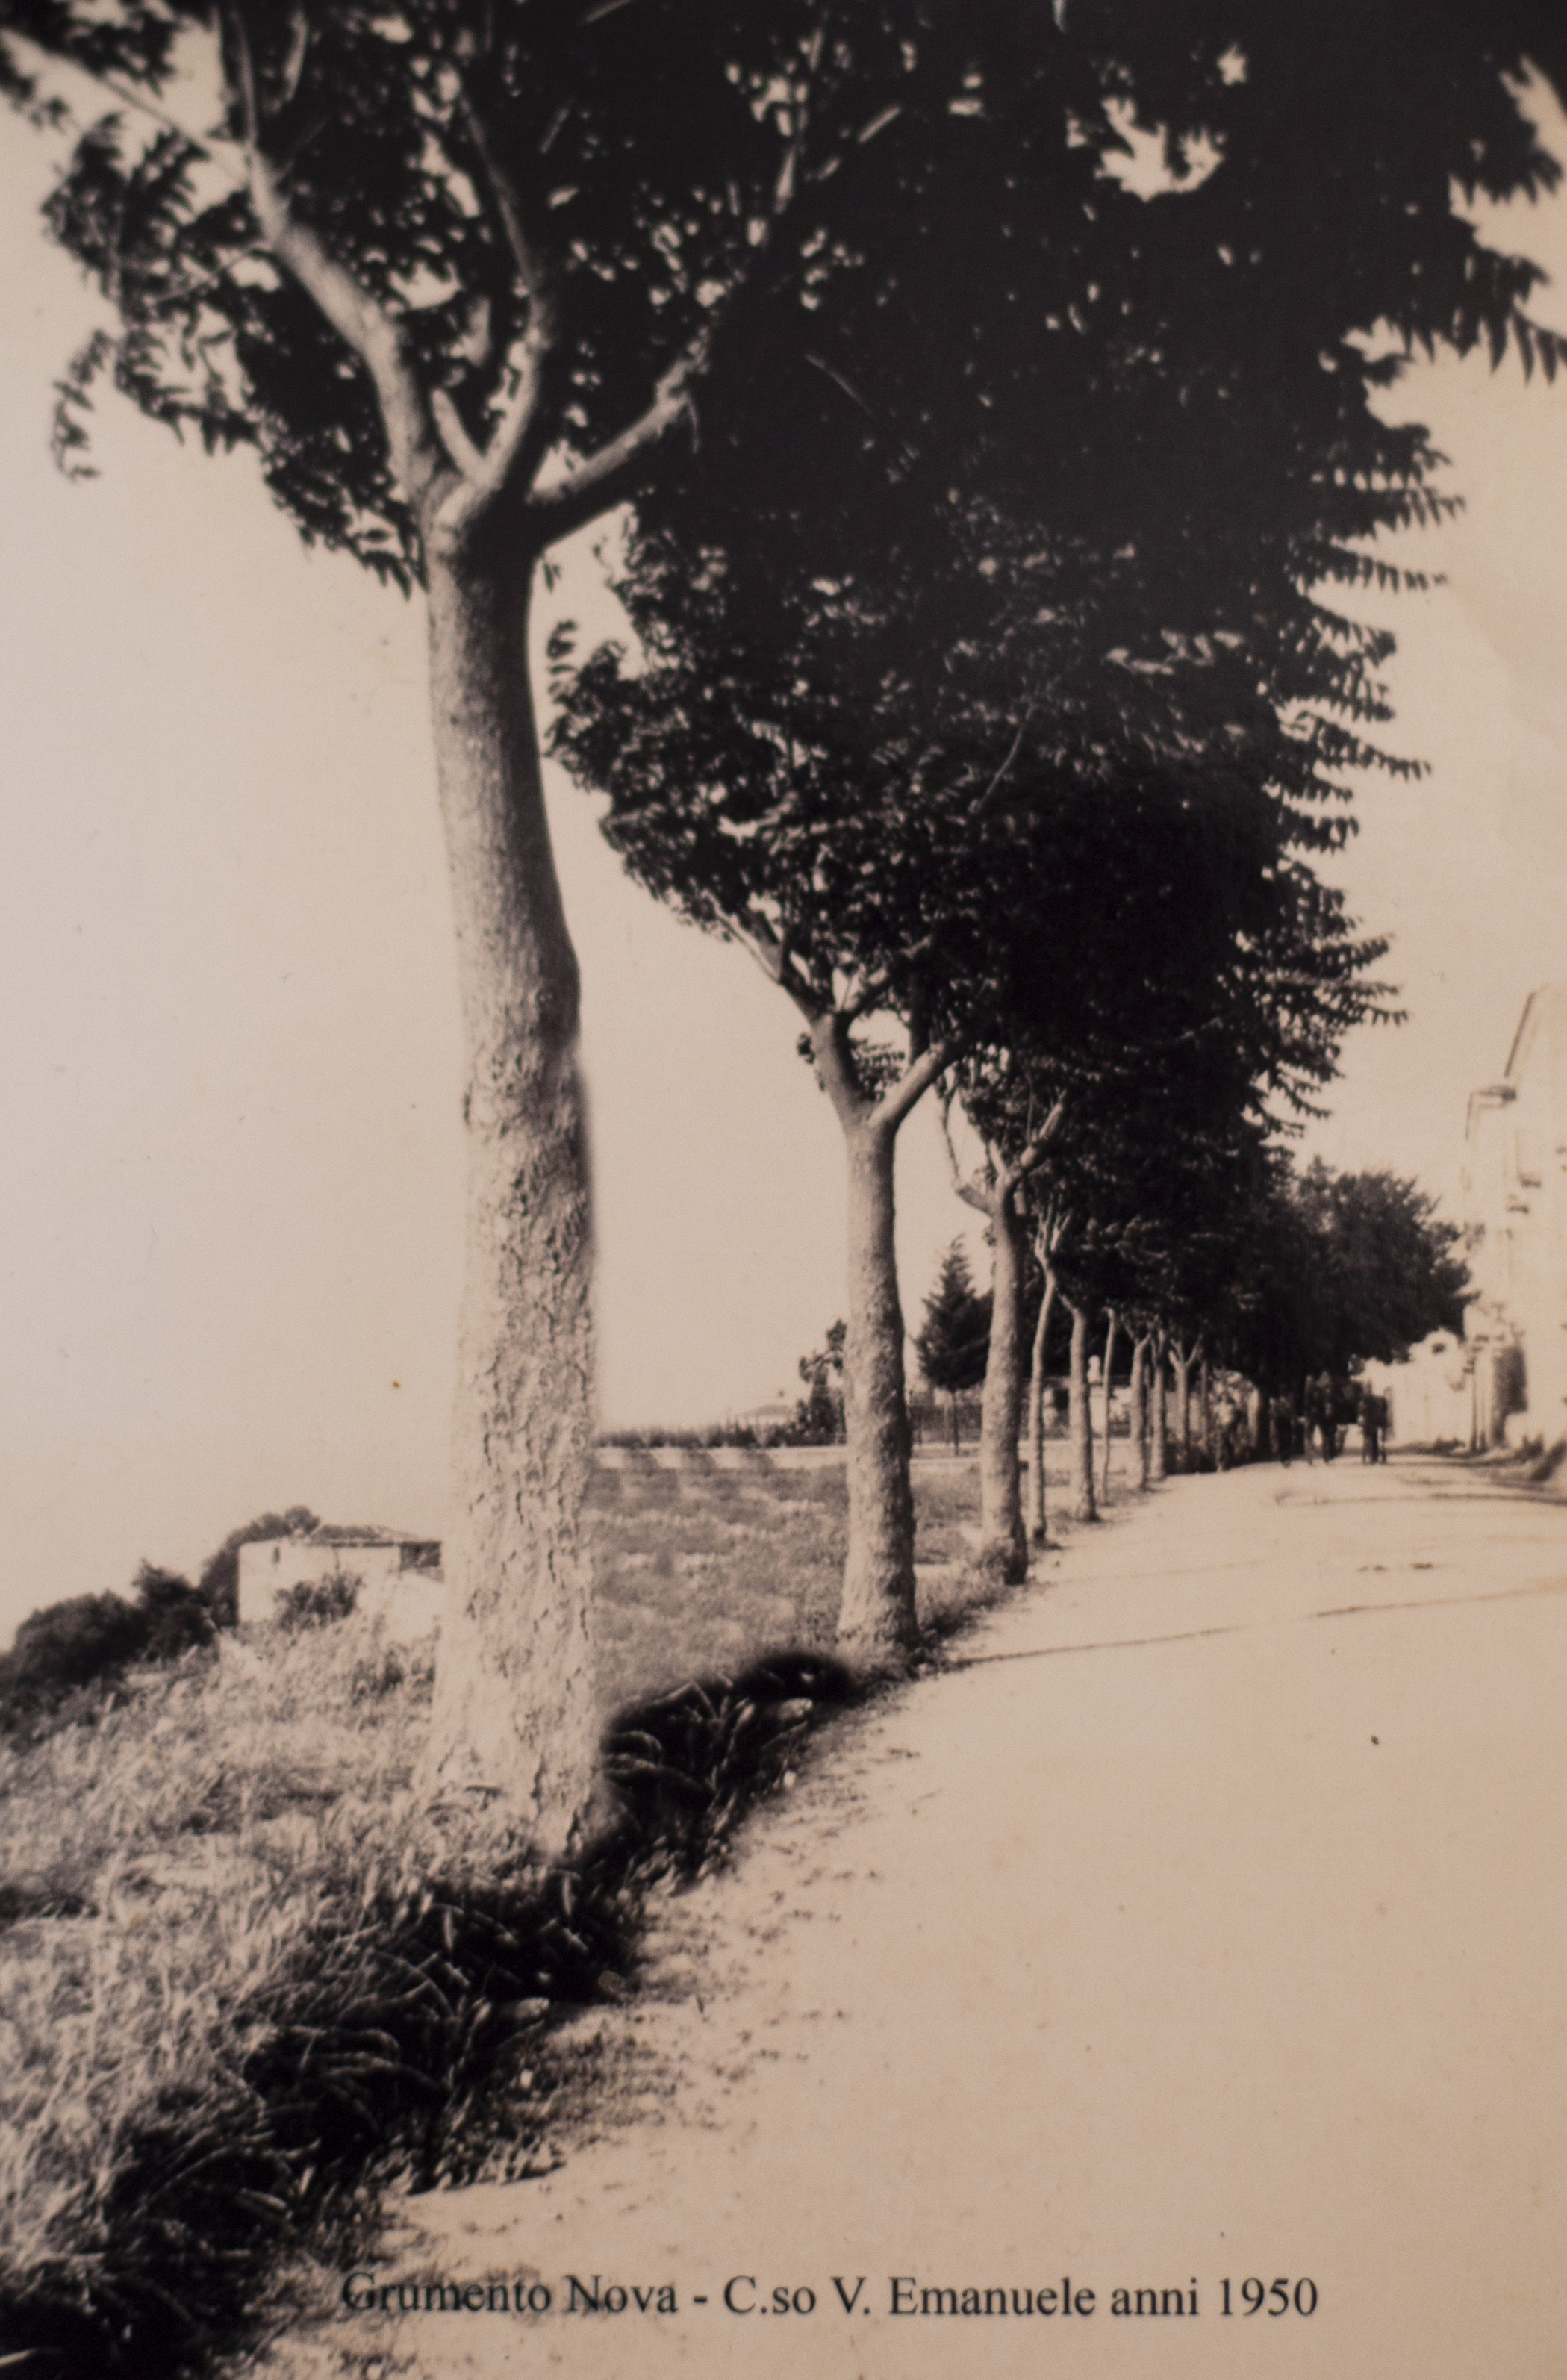 Trees along Vittorio Emanuele street in the 1950's.